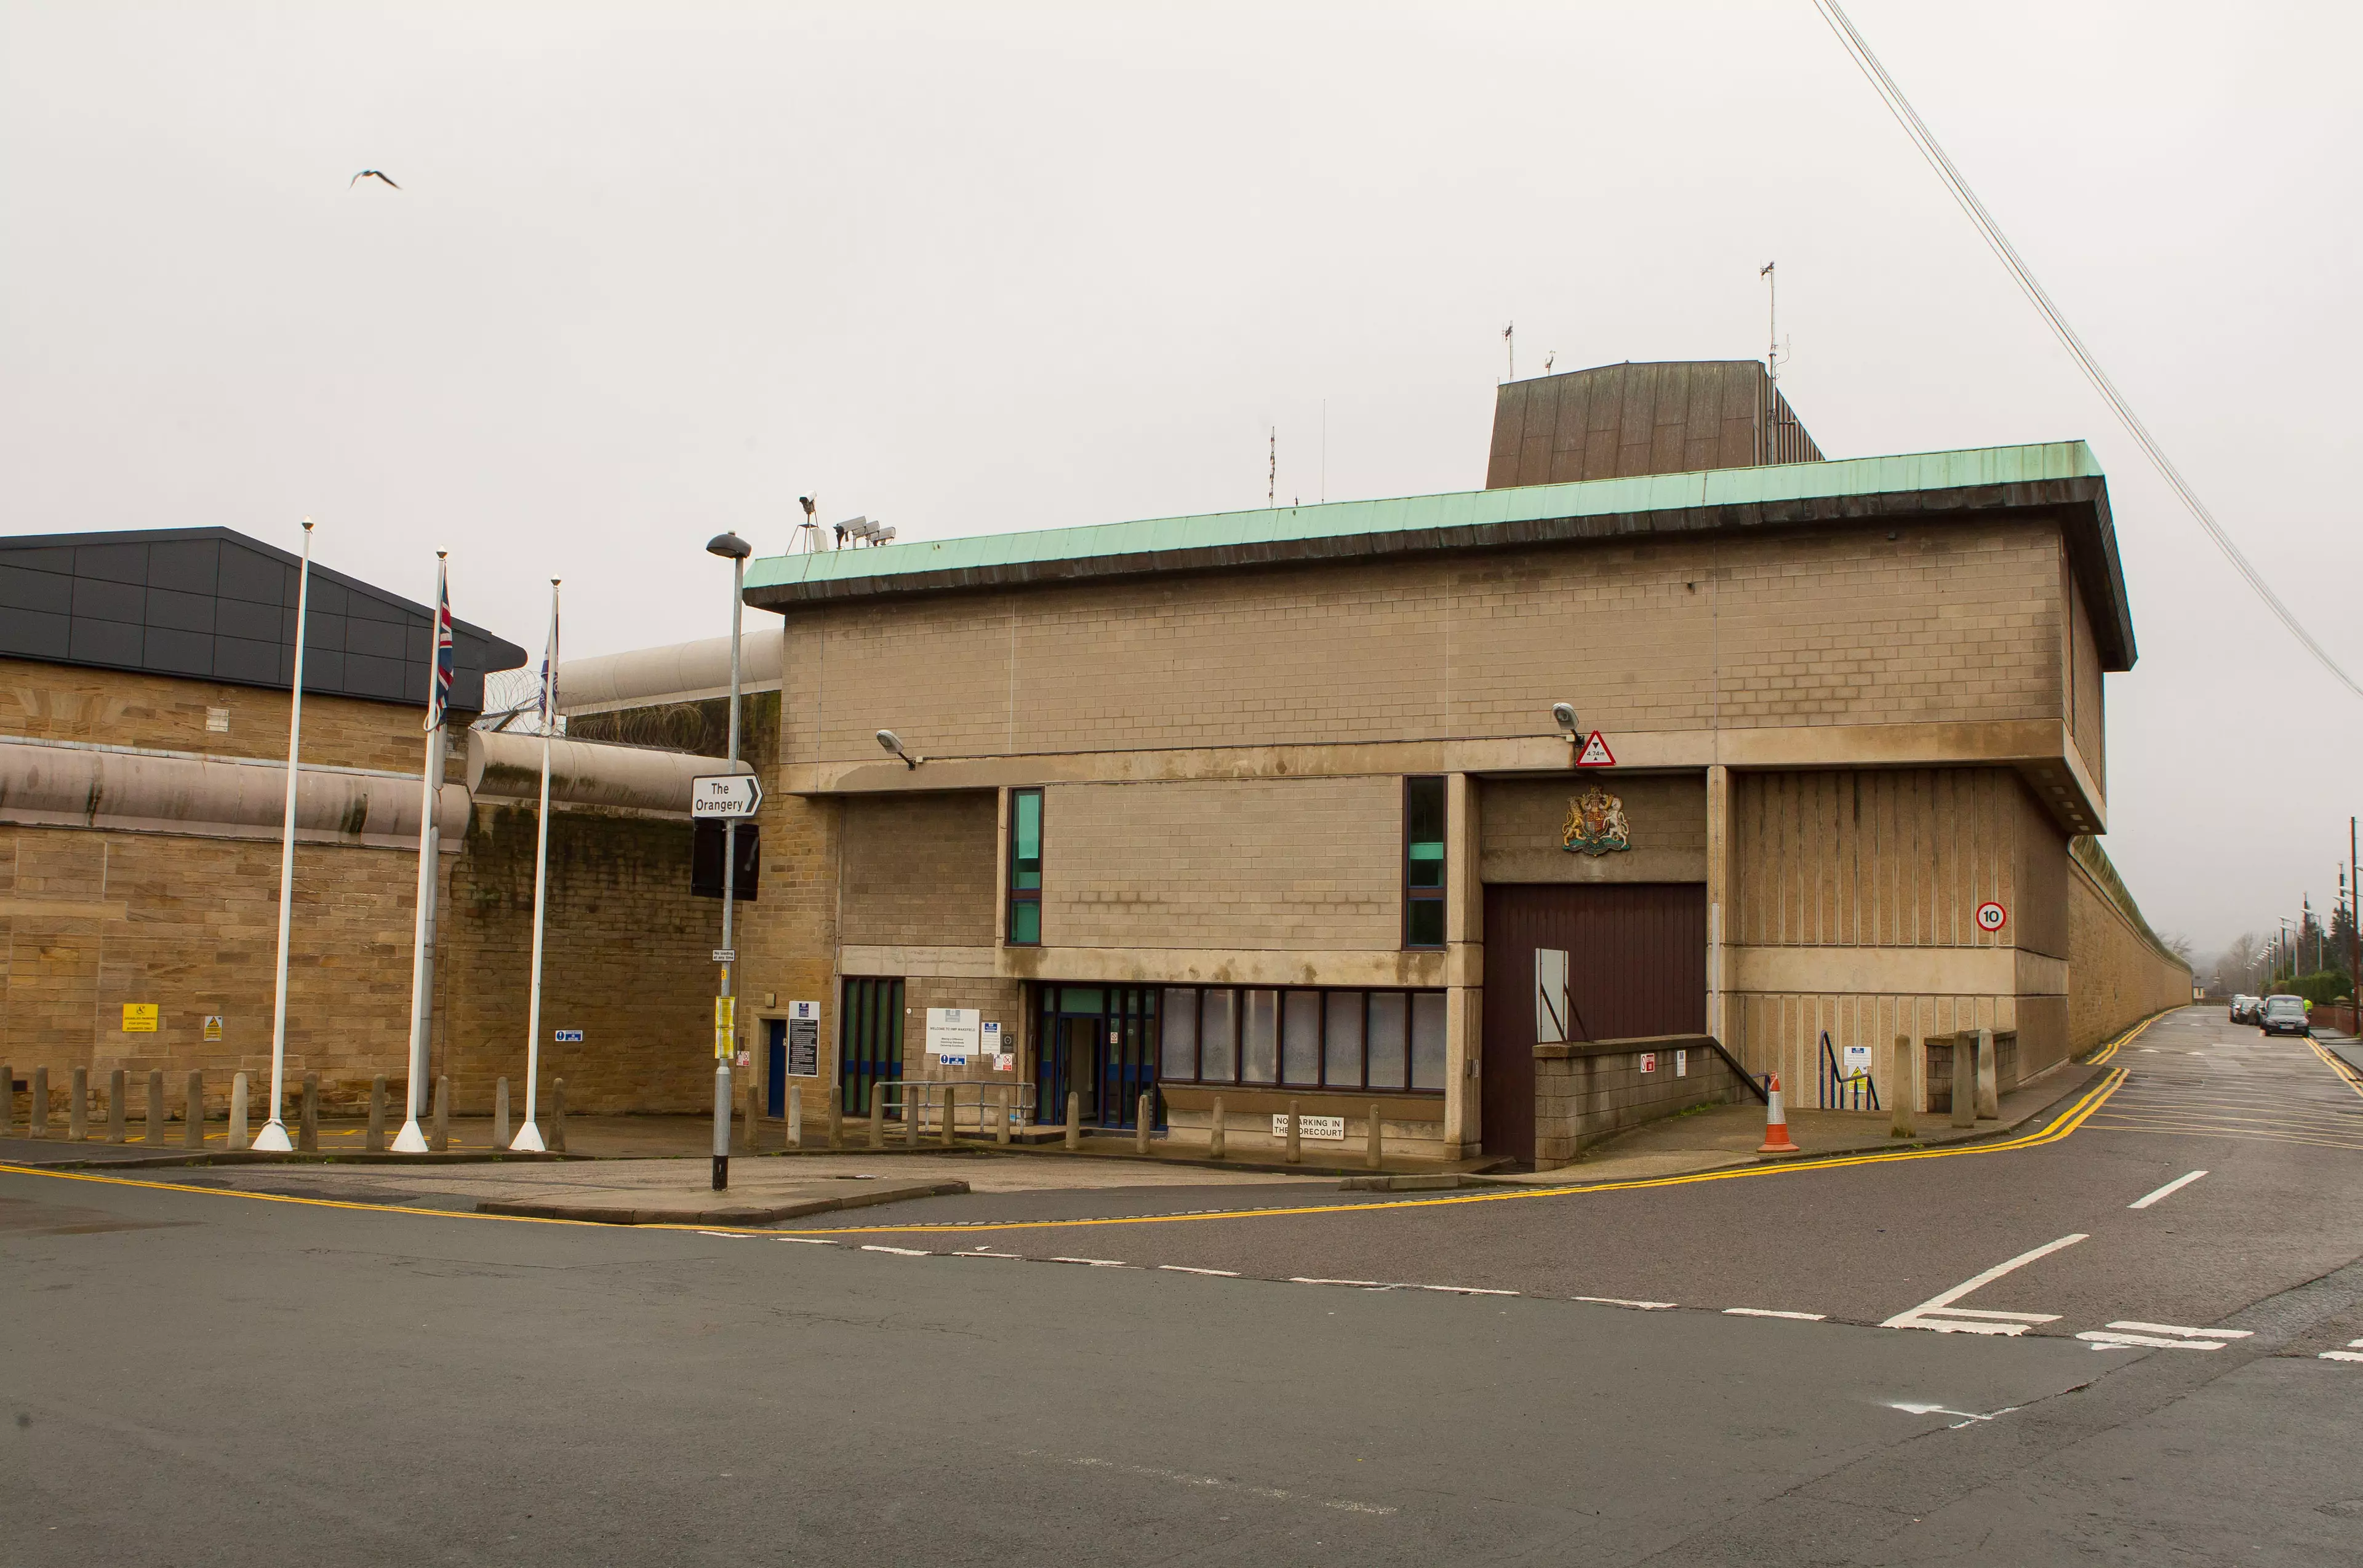 Wakefield Prison.